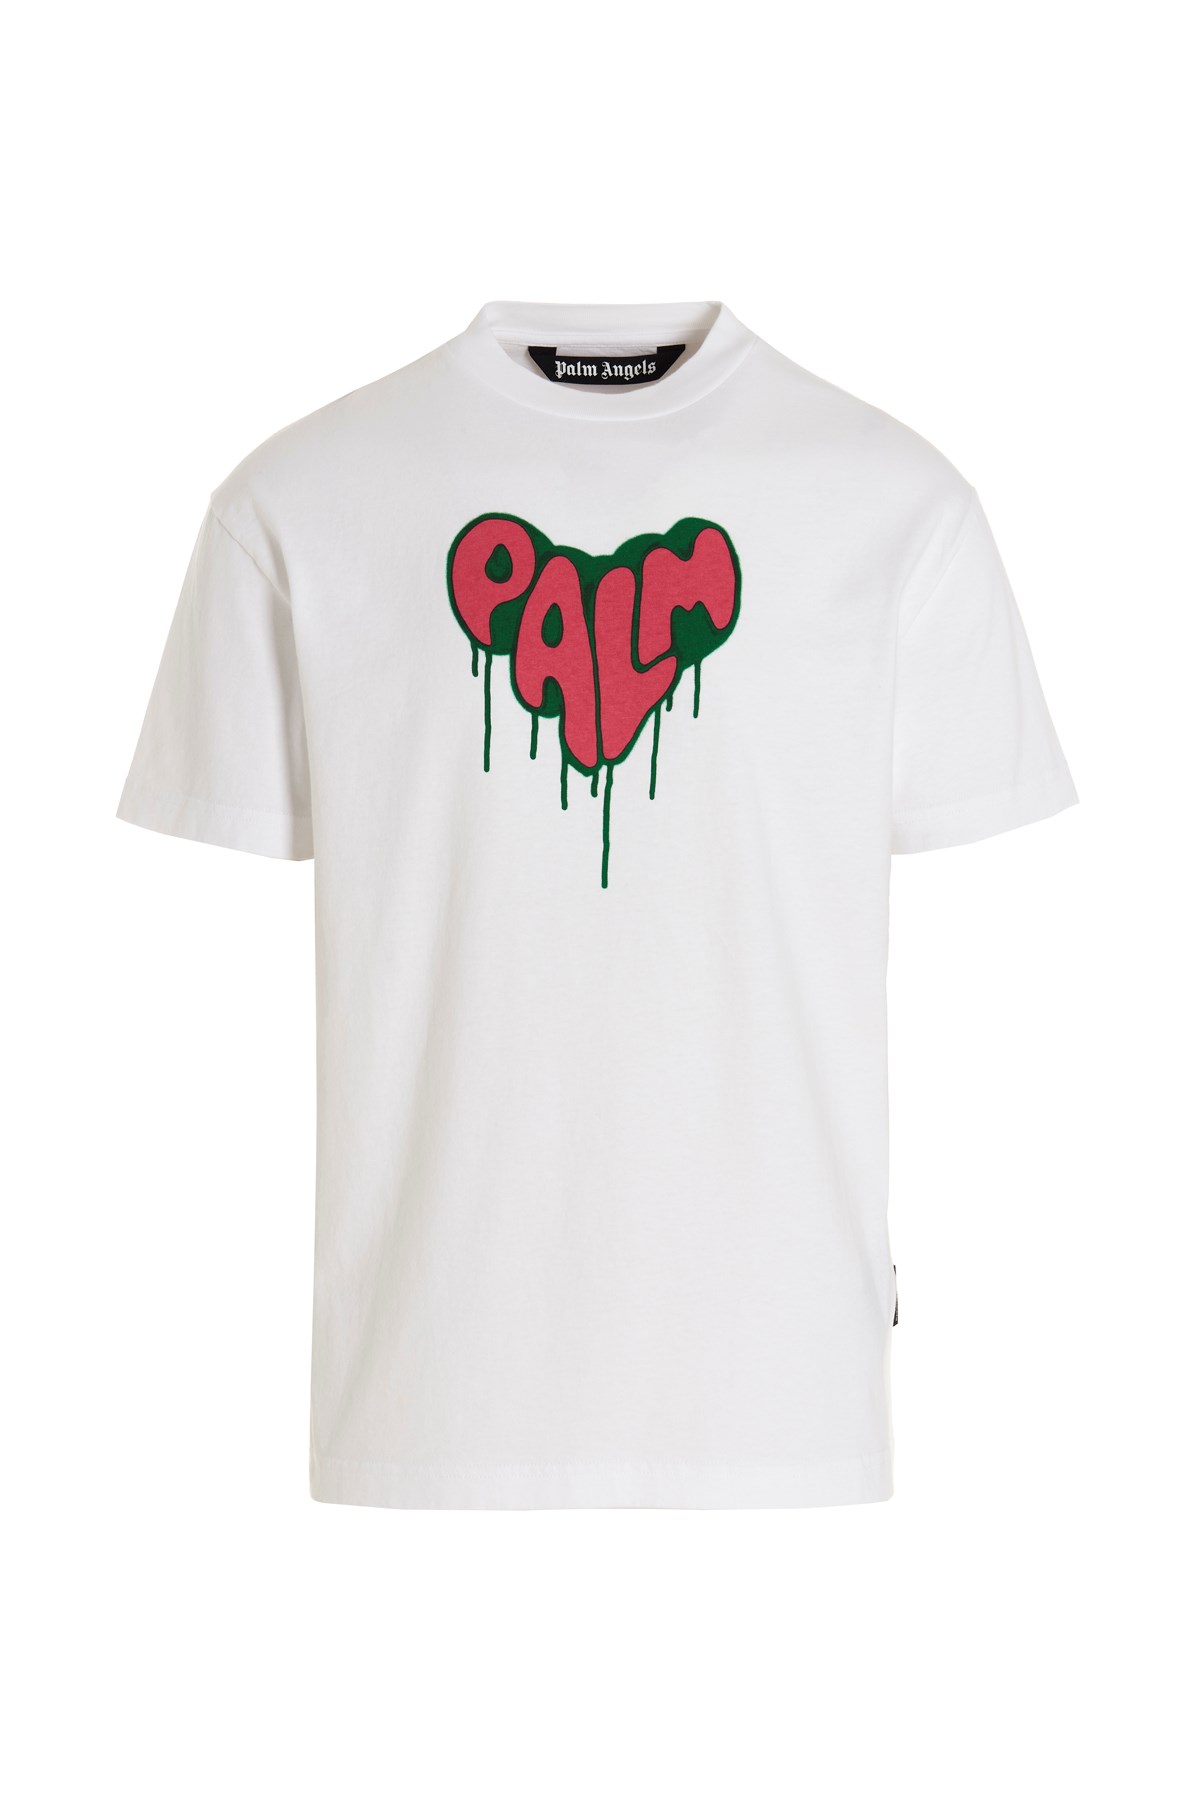 PALM ANGELS ‘Spray Heart’ T-Shirt